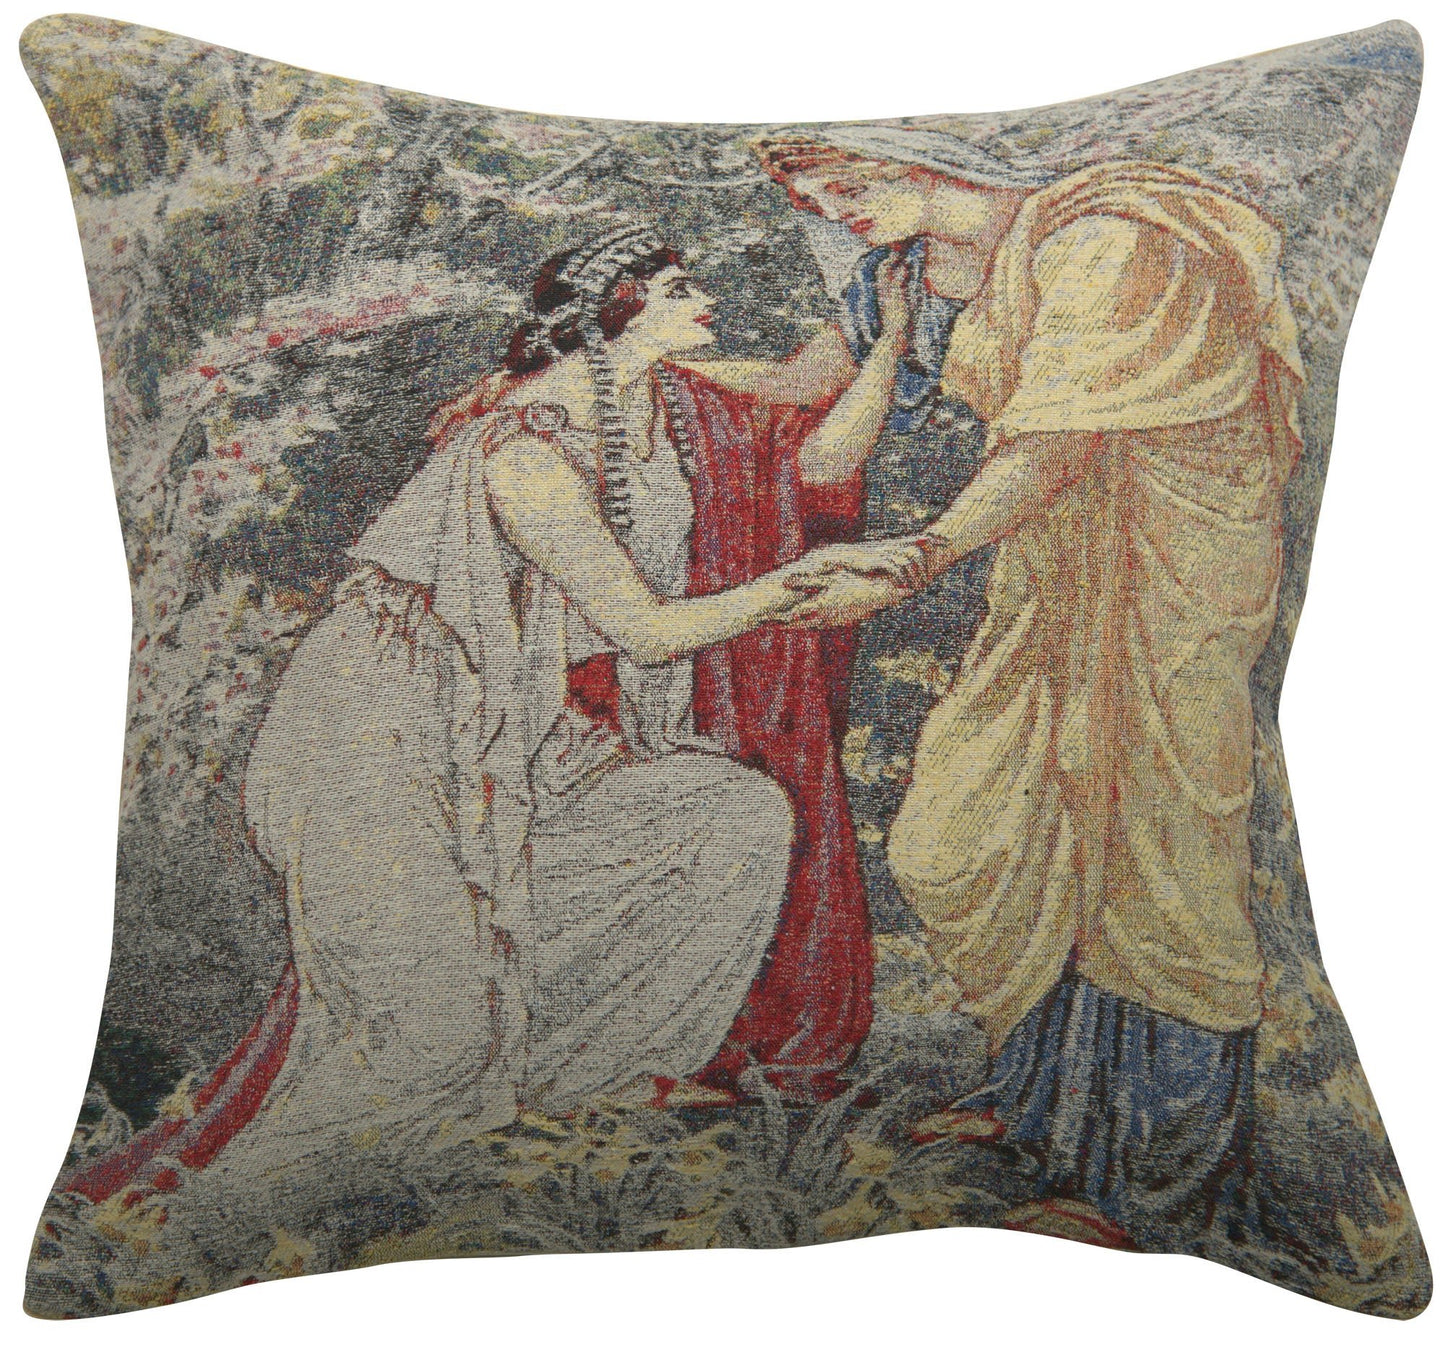 Demeter and Persephone Decorative Pillow Cushion Cover - RoseStraya.com